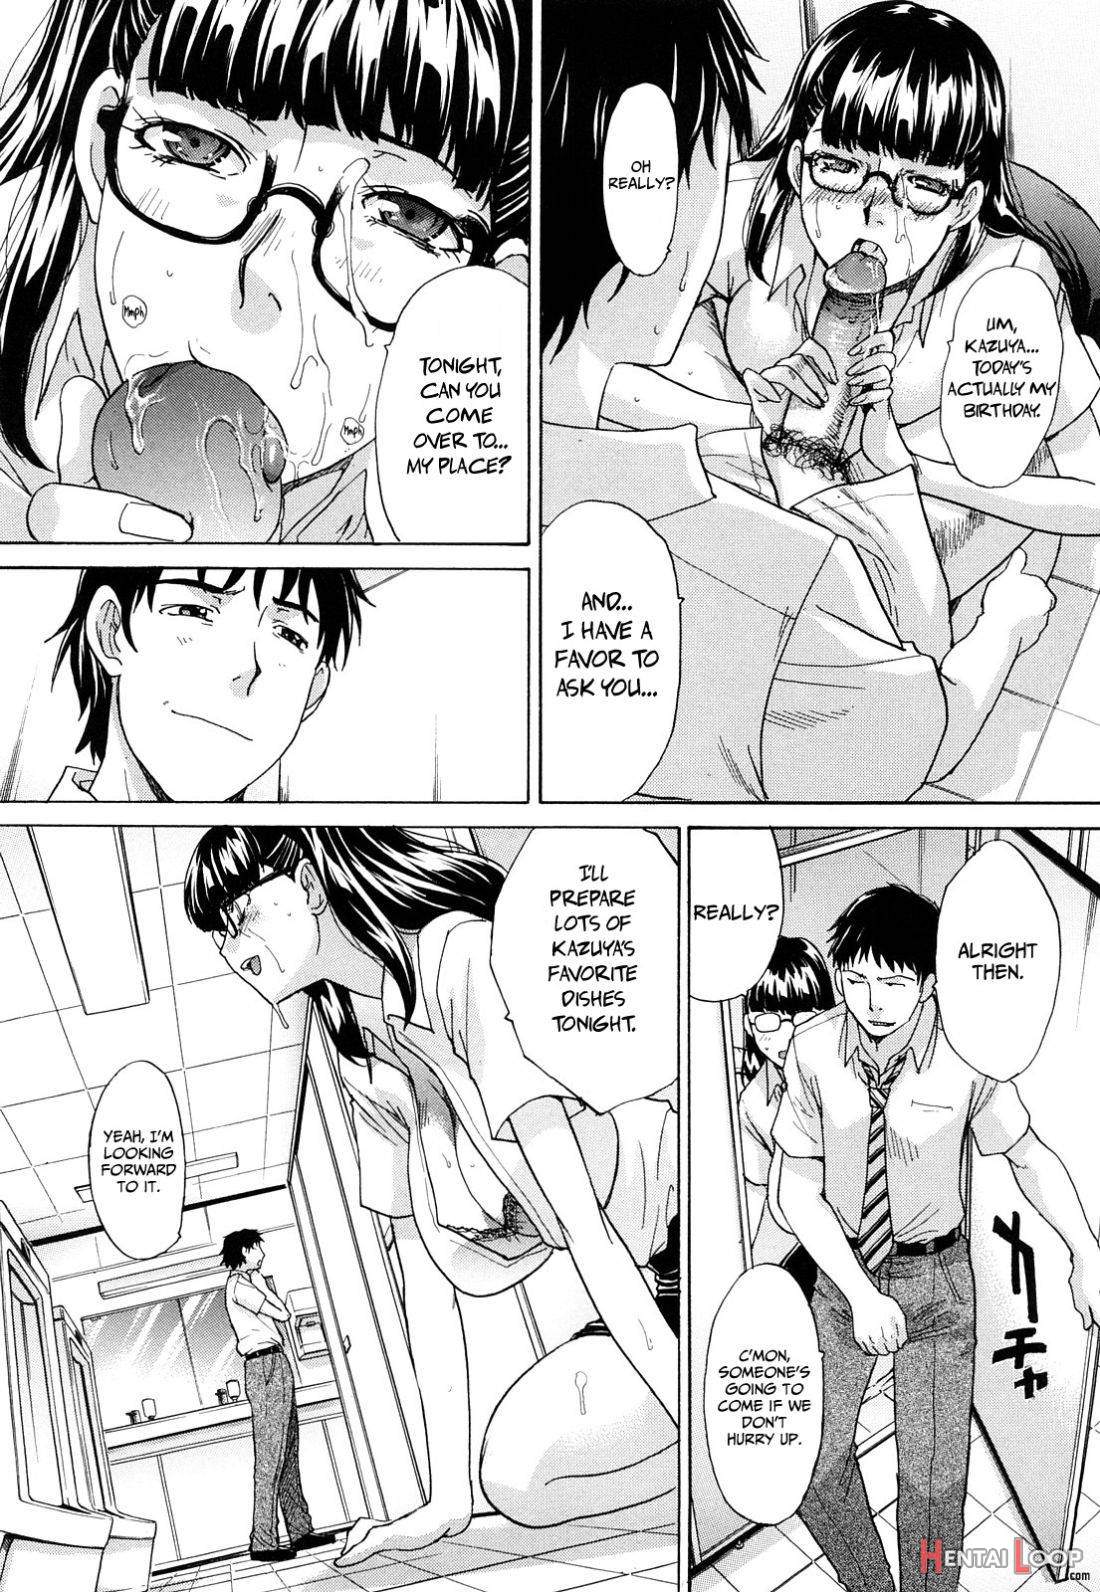 Owari no Hajimari page 5